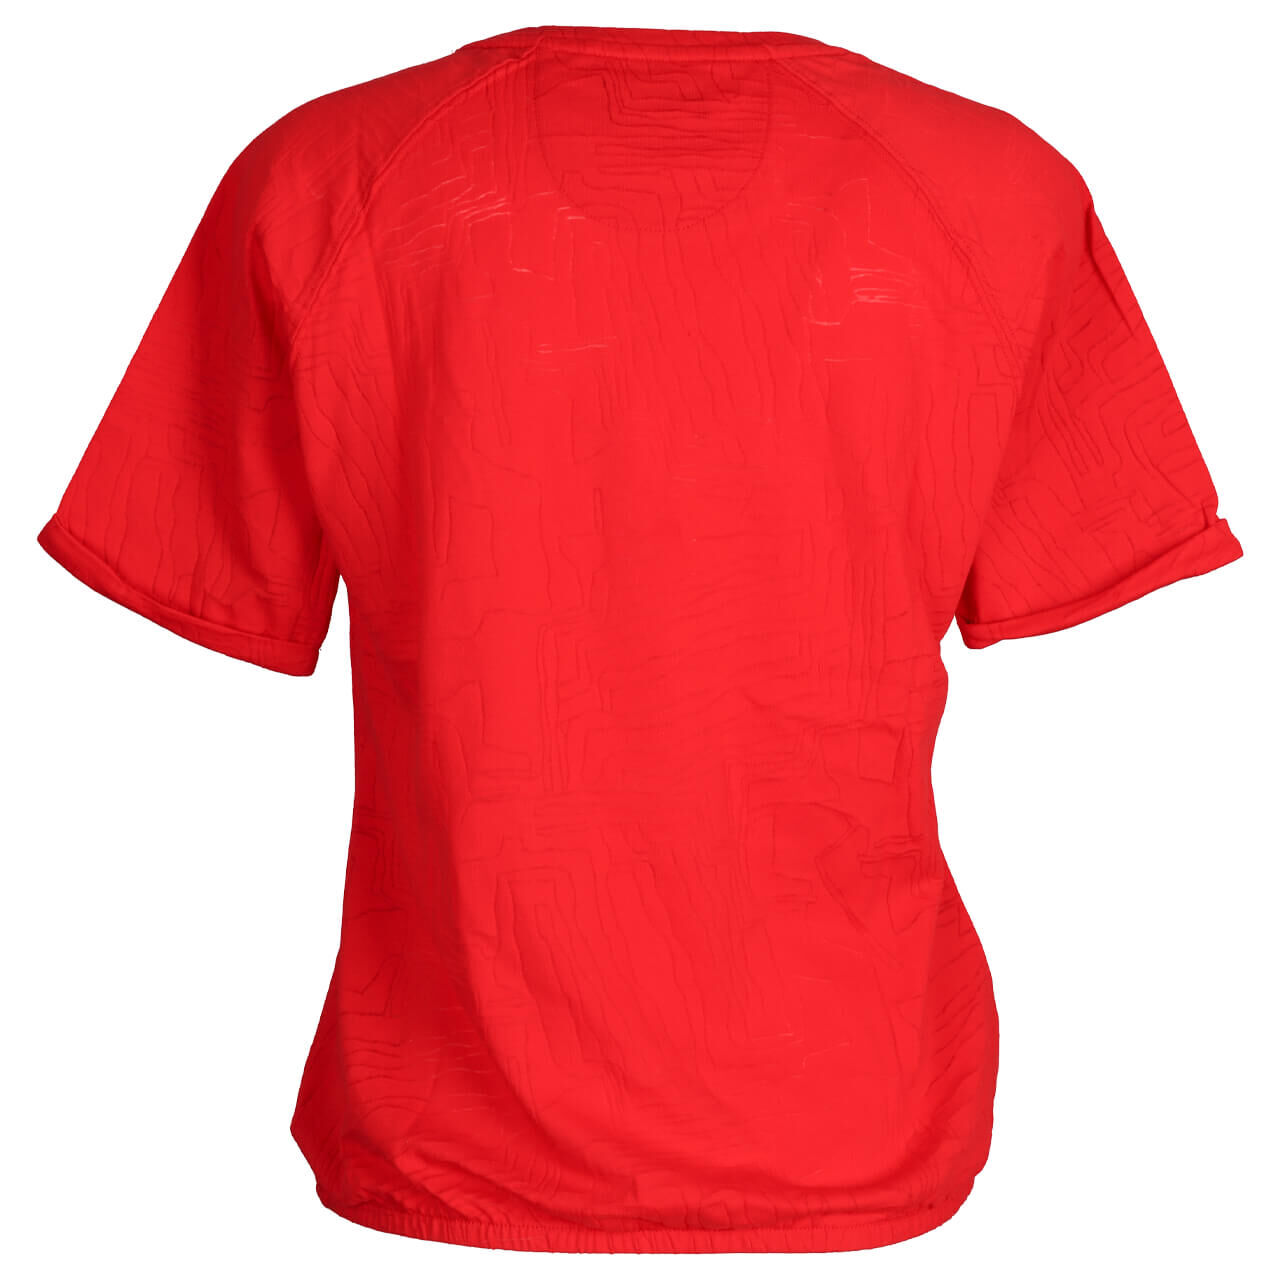 Soquesto Damen T-Shirt burnout tomato red